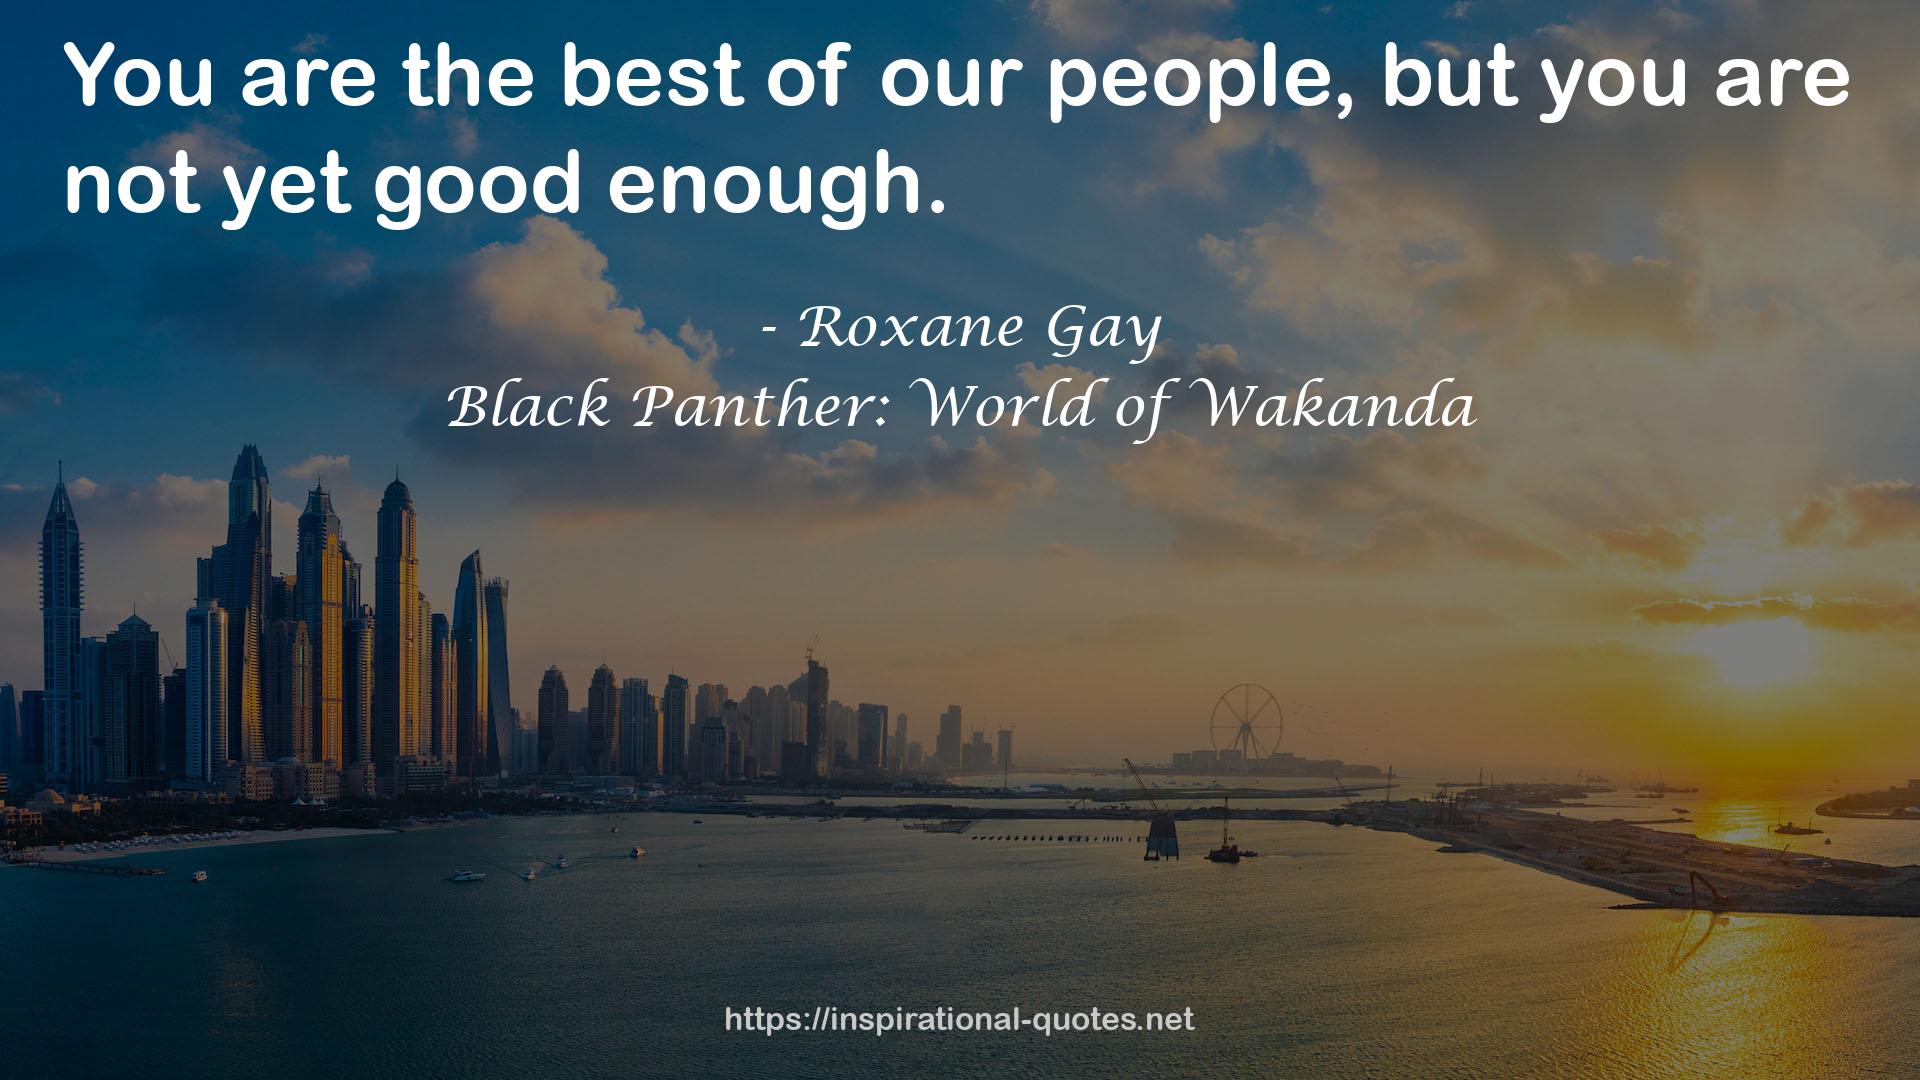 Black Panther: World of Wakanda QUOTES